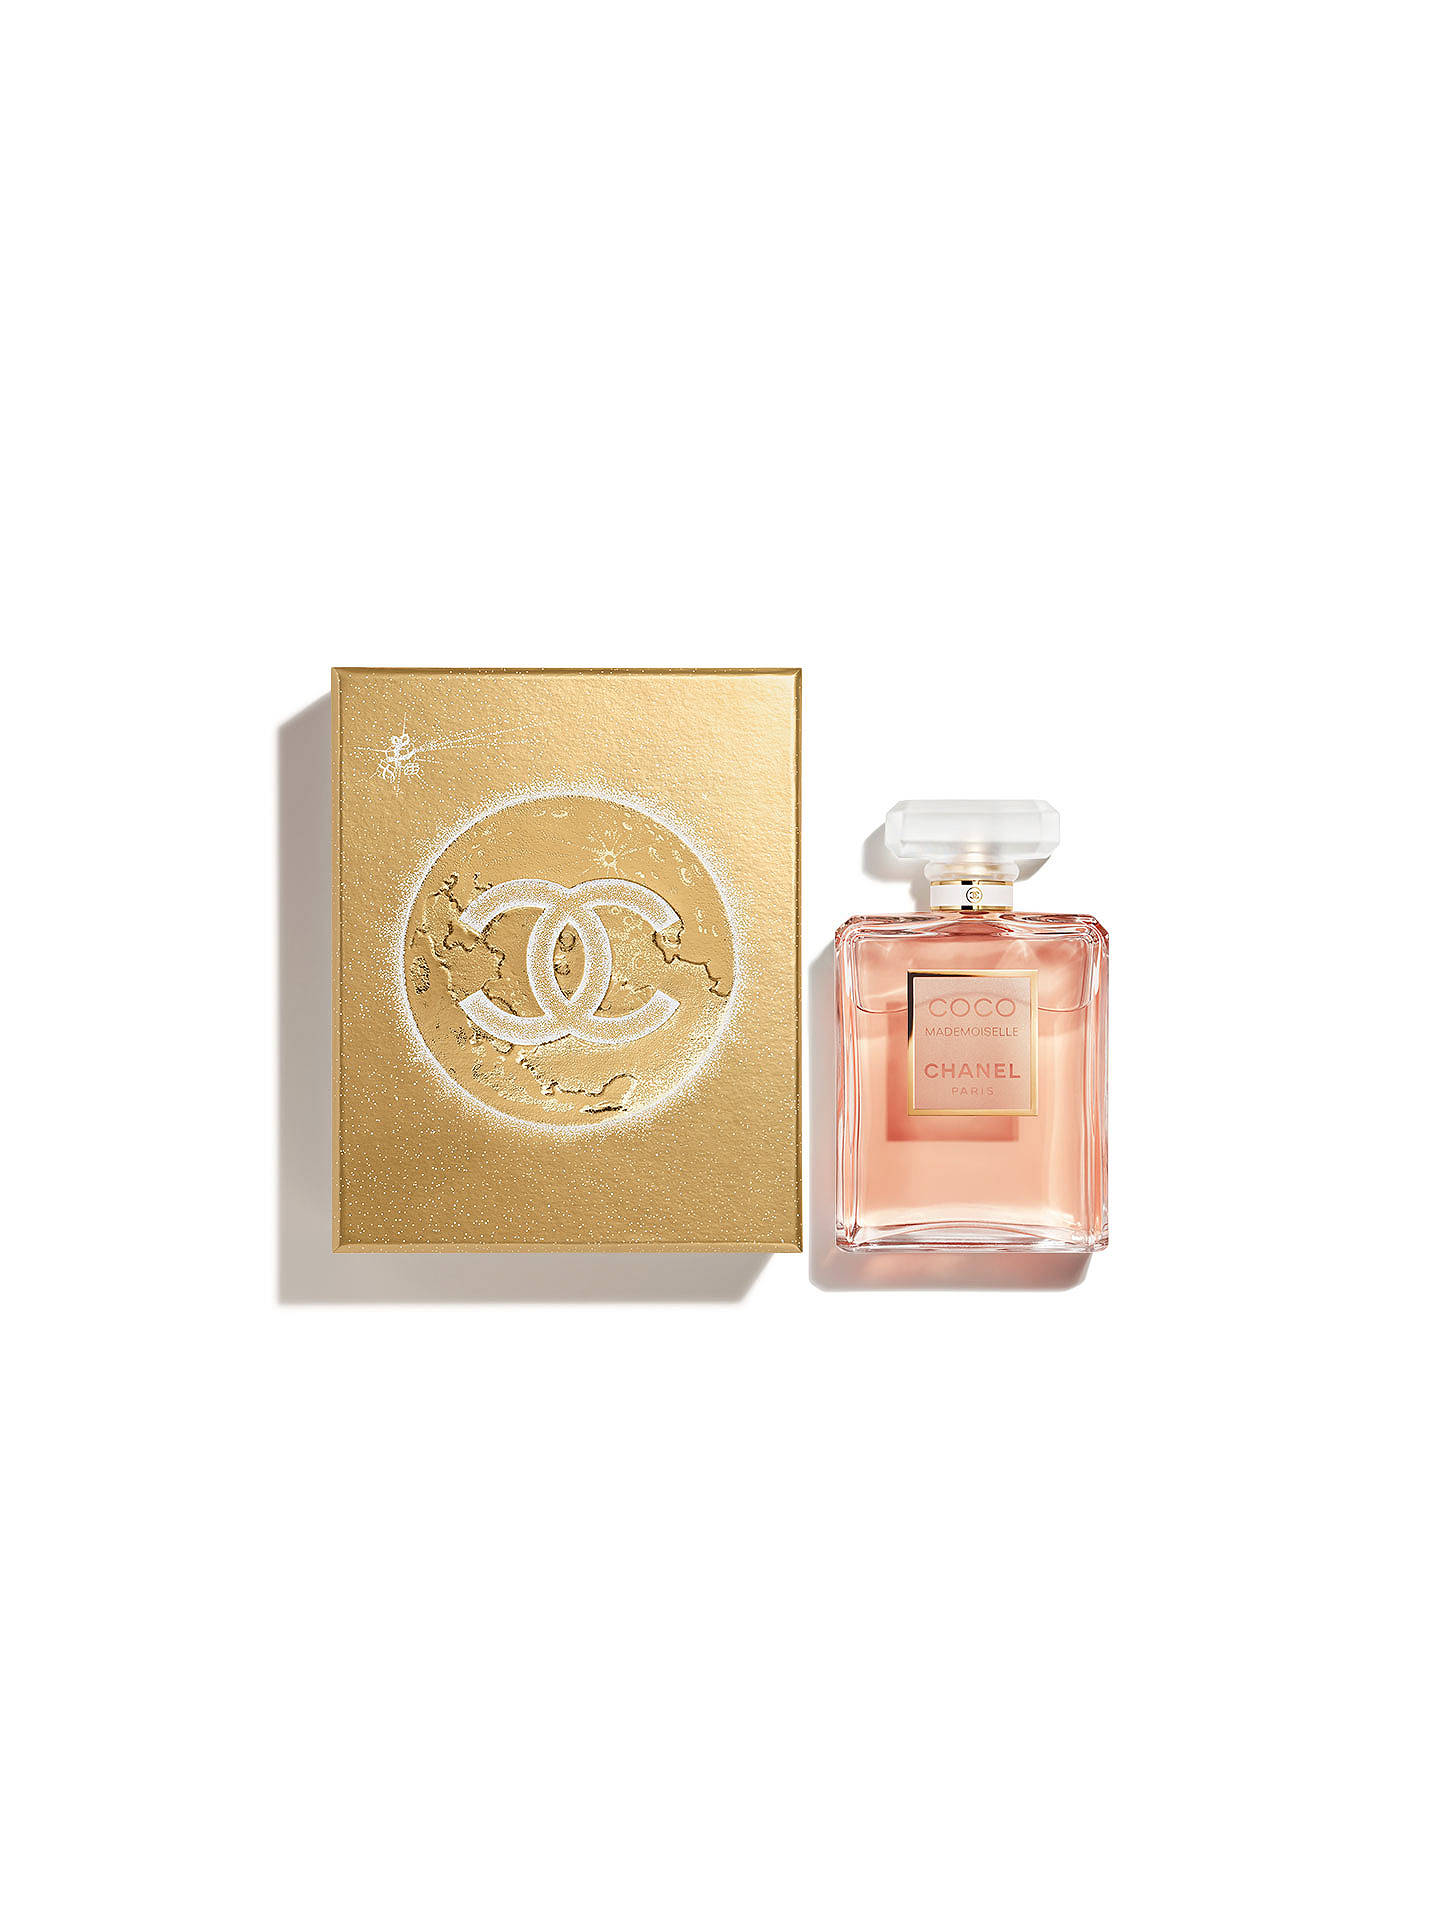 CHANEL Coco Mademoiselle Eau De Parfum 100ml With Gift Box